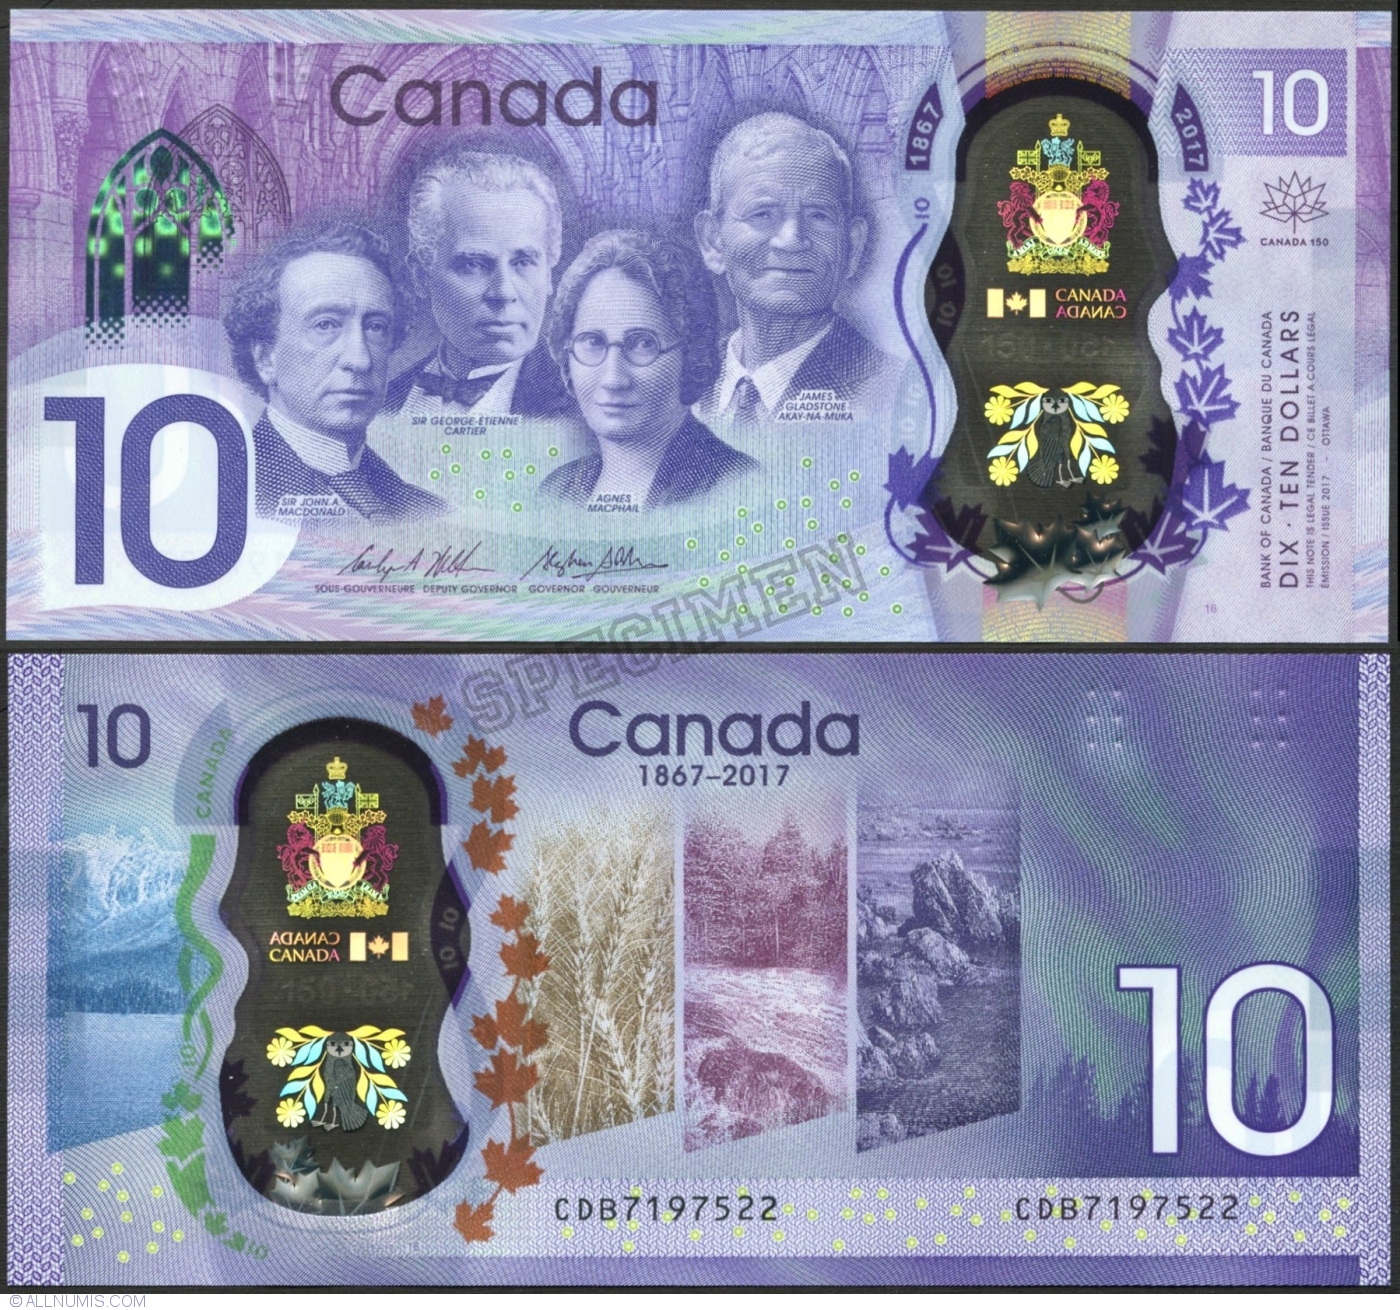 Canada 2017 Commemorative Polymer $10 BC-75 GEM UNC PMG 66 EPQ